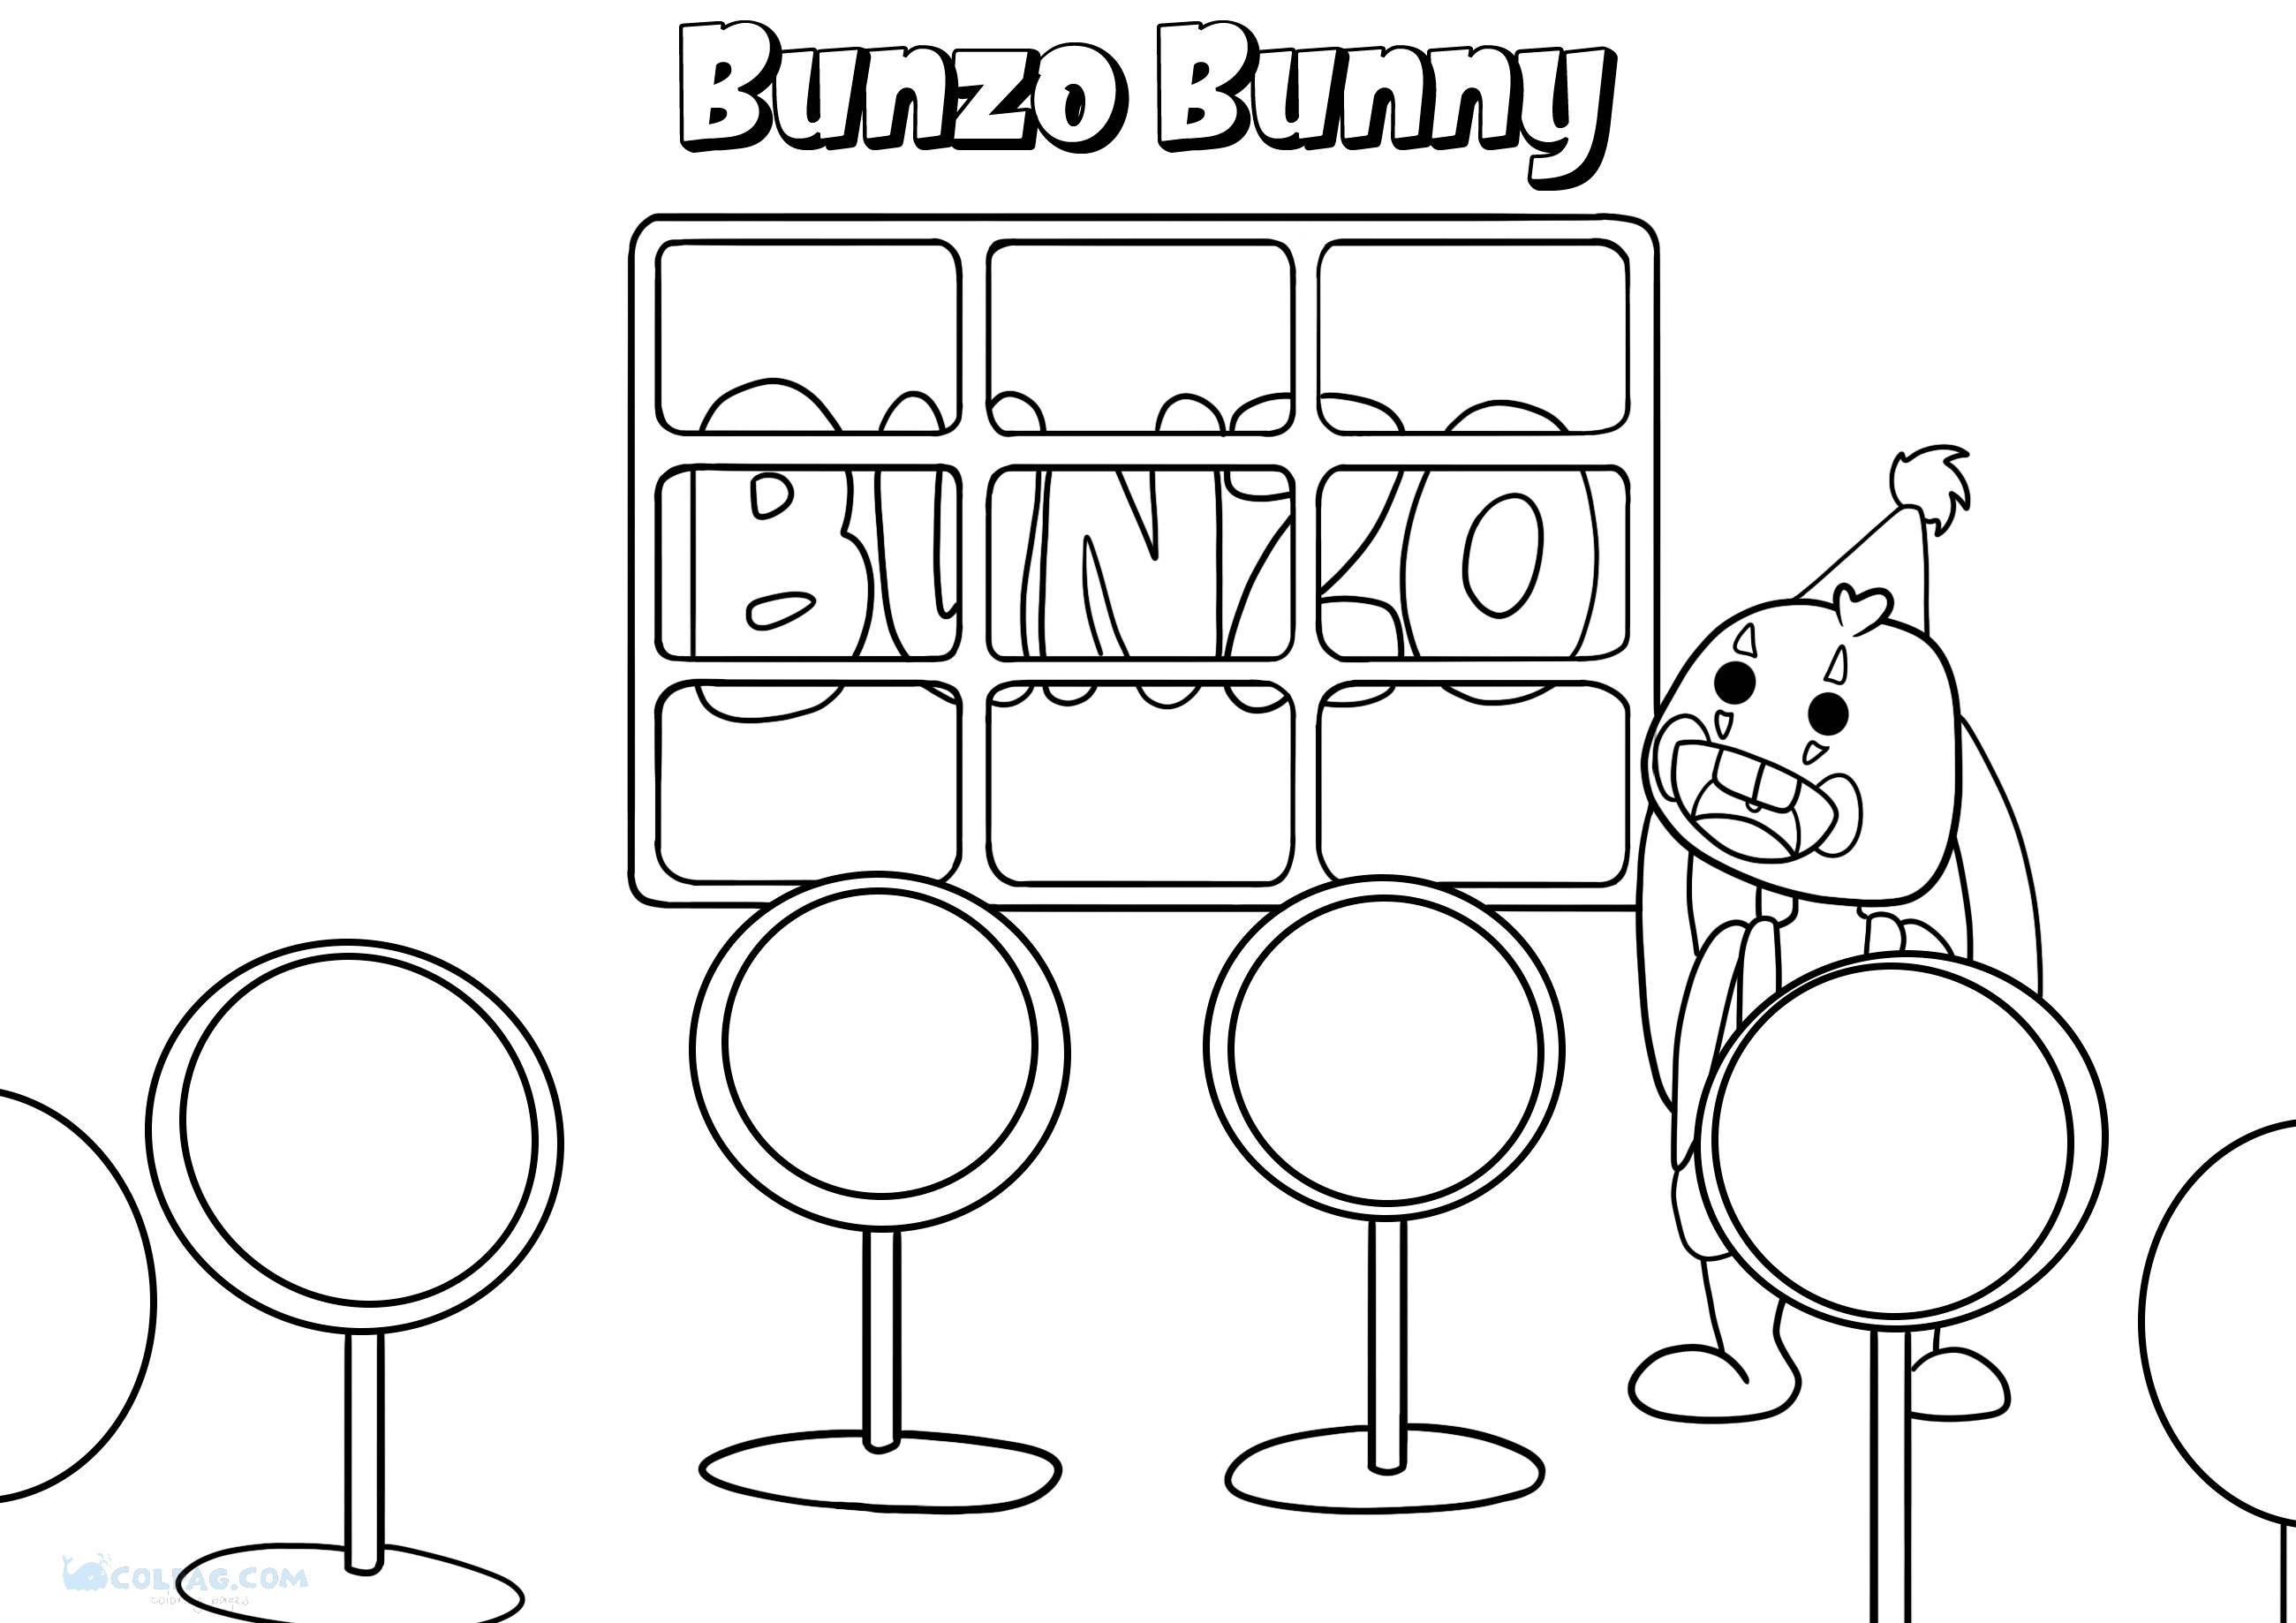 bunzo-bunny-coloring-page-colpag-com-2